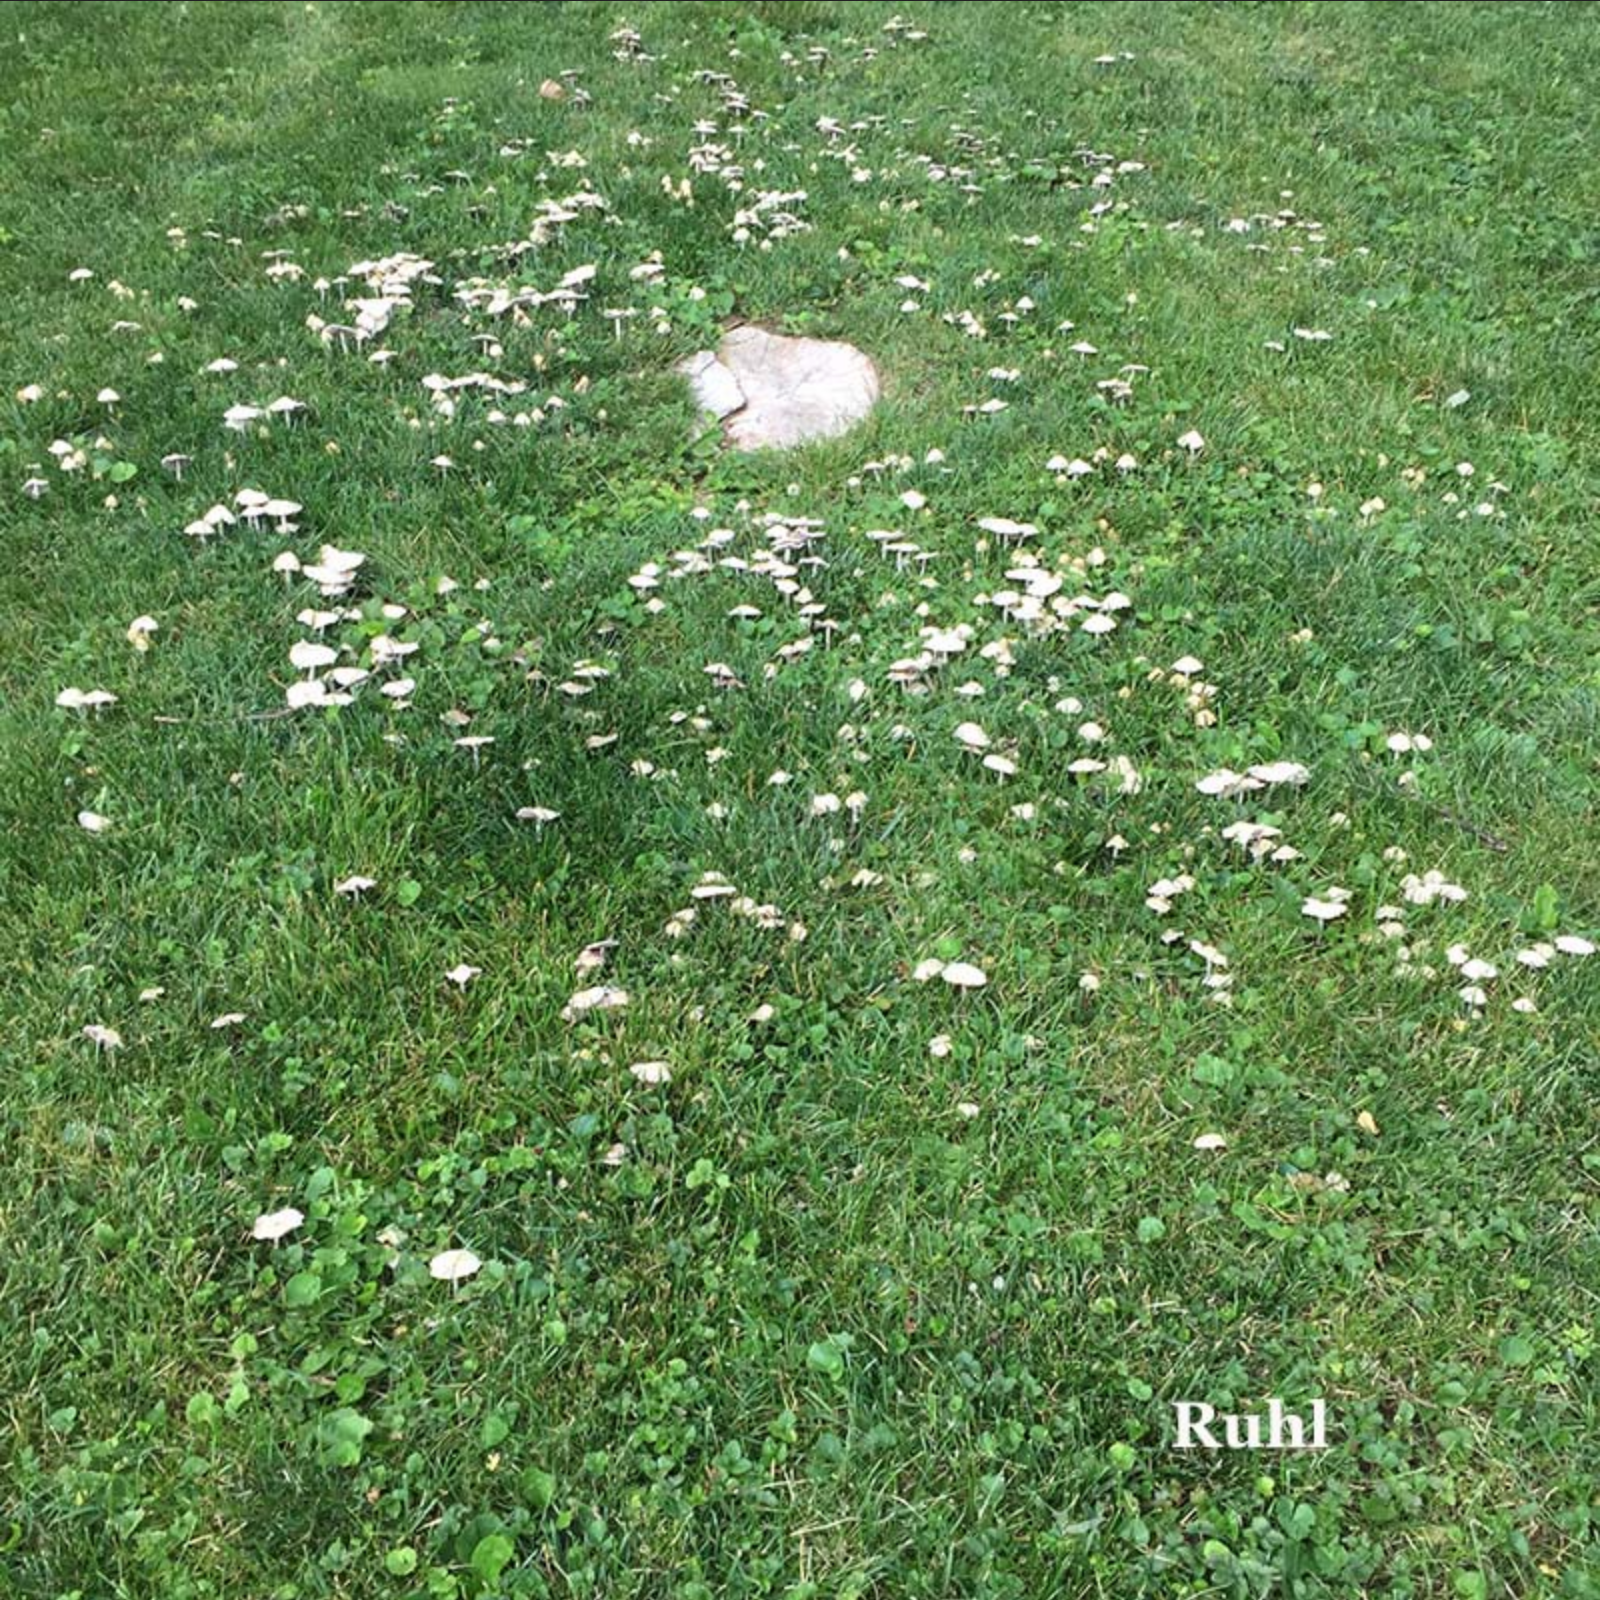 mushrooms in yard